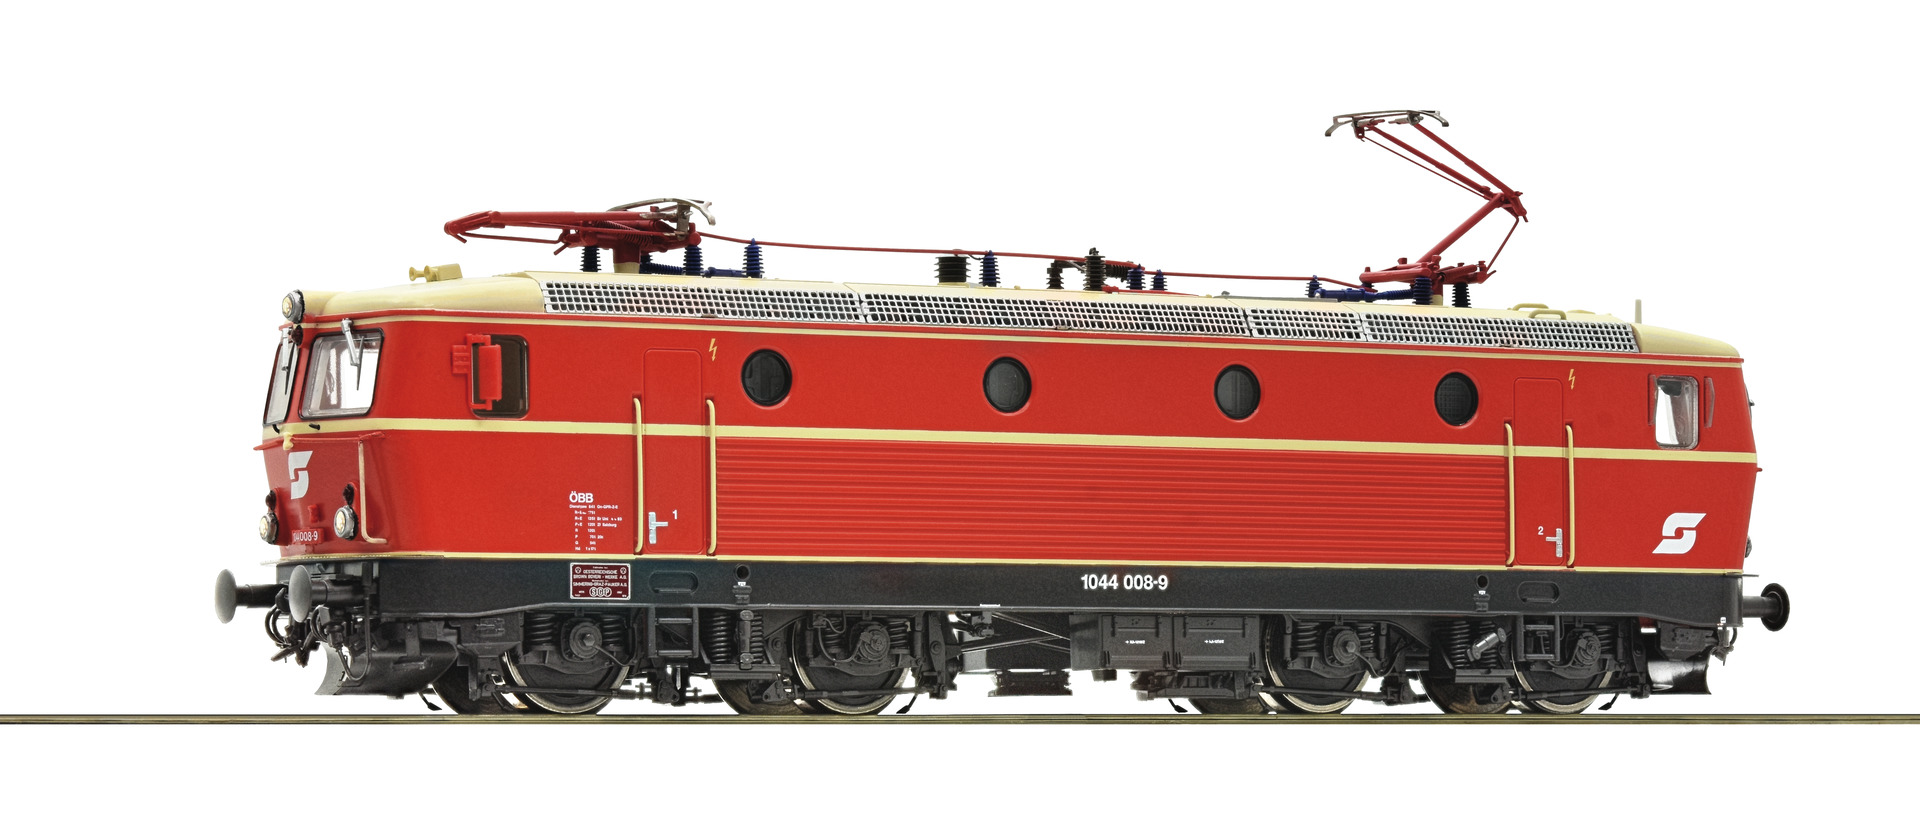 ROCO 73070 - Electric locomotive 1044 008-9 0BB